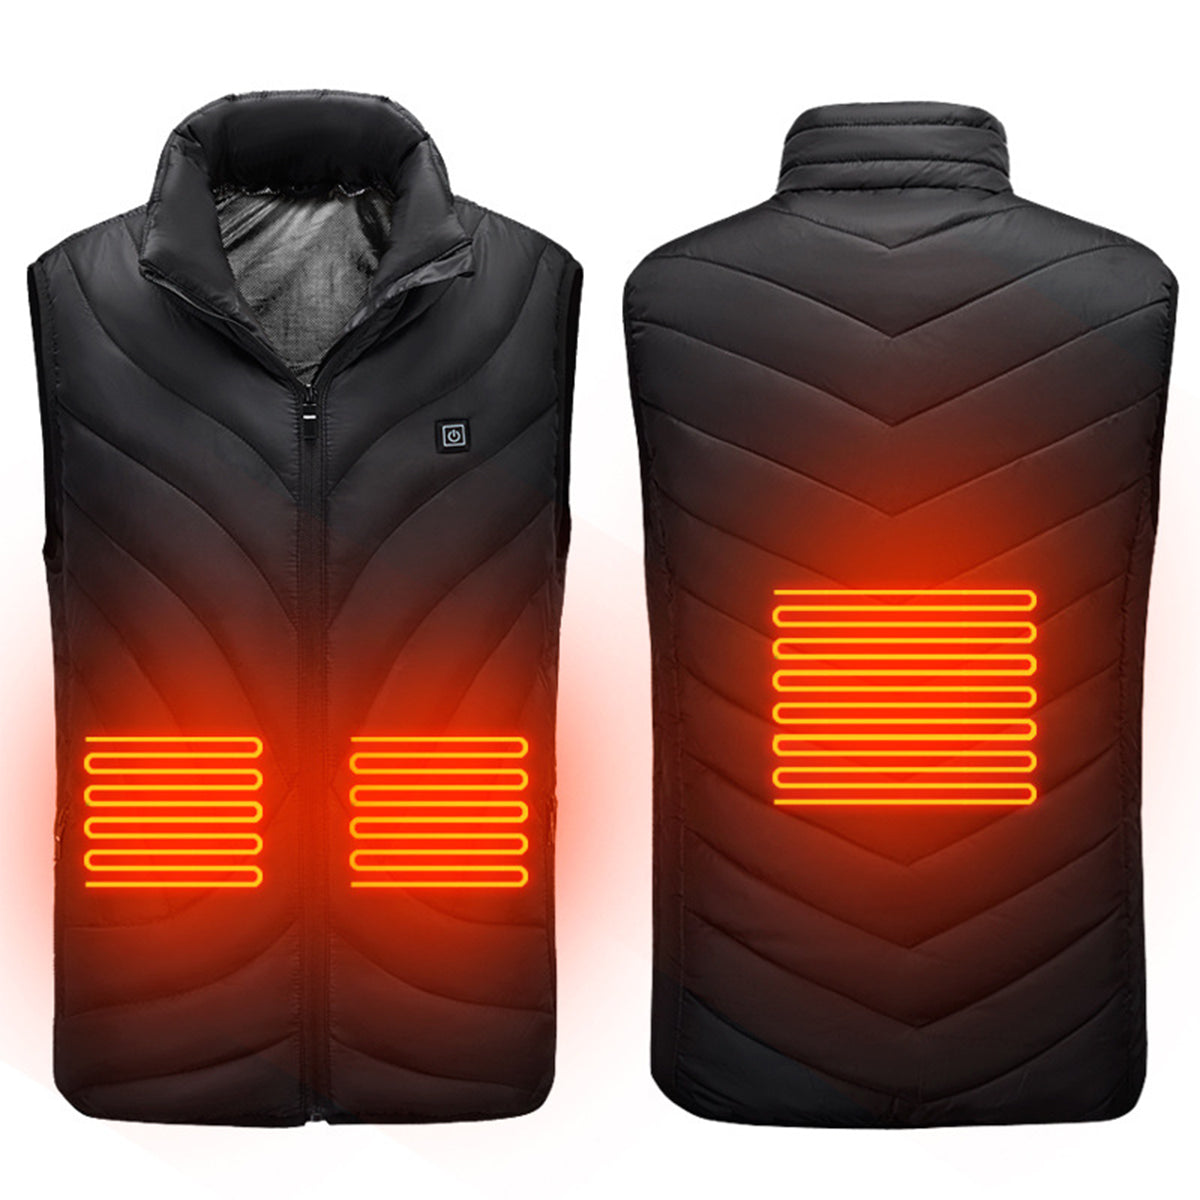 Tomato Red/Black 5V USB Heated Vest Men Winter Electrical Heated Sleeveless Jacket Outdoor Hiking